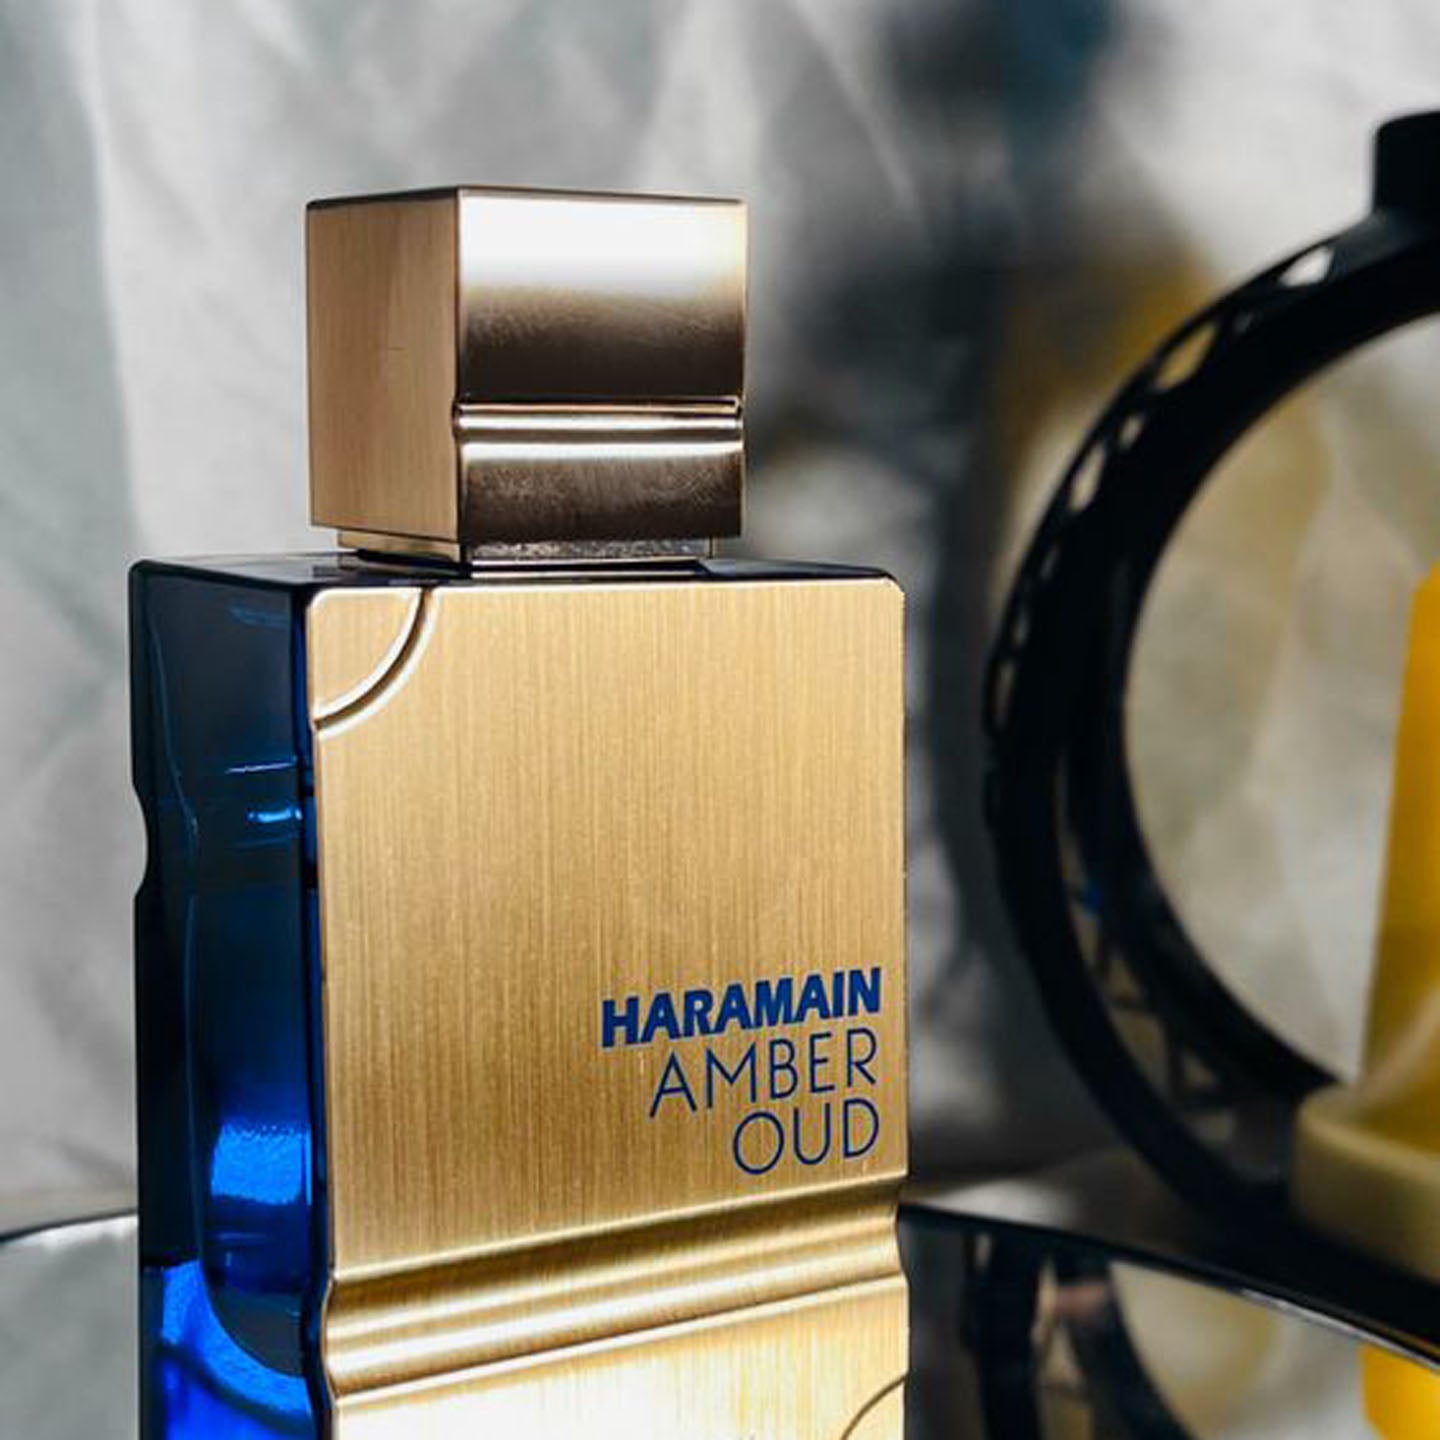 Al Haramain Amber Oud Bleu Eau de Parfum Spray 60 ml for Men